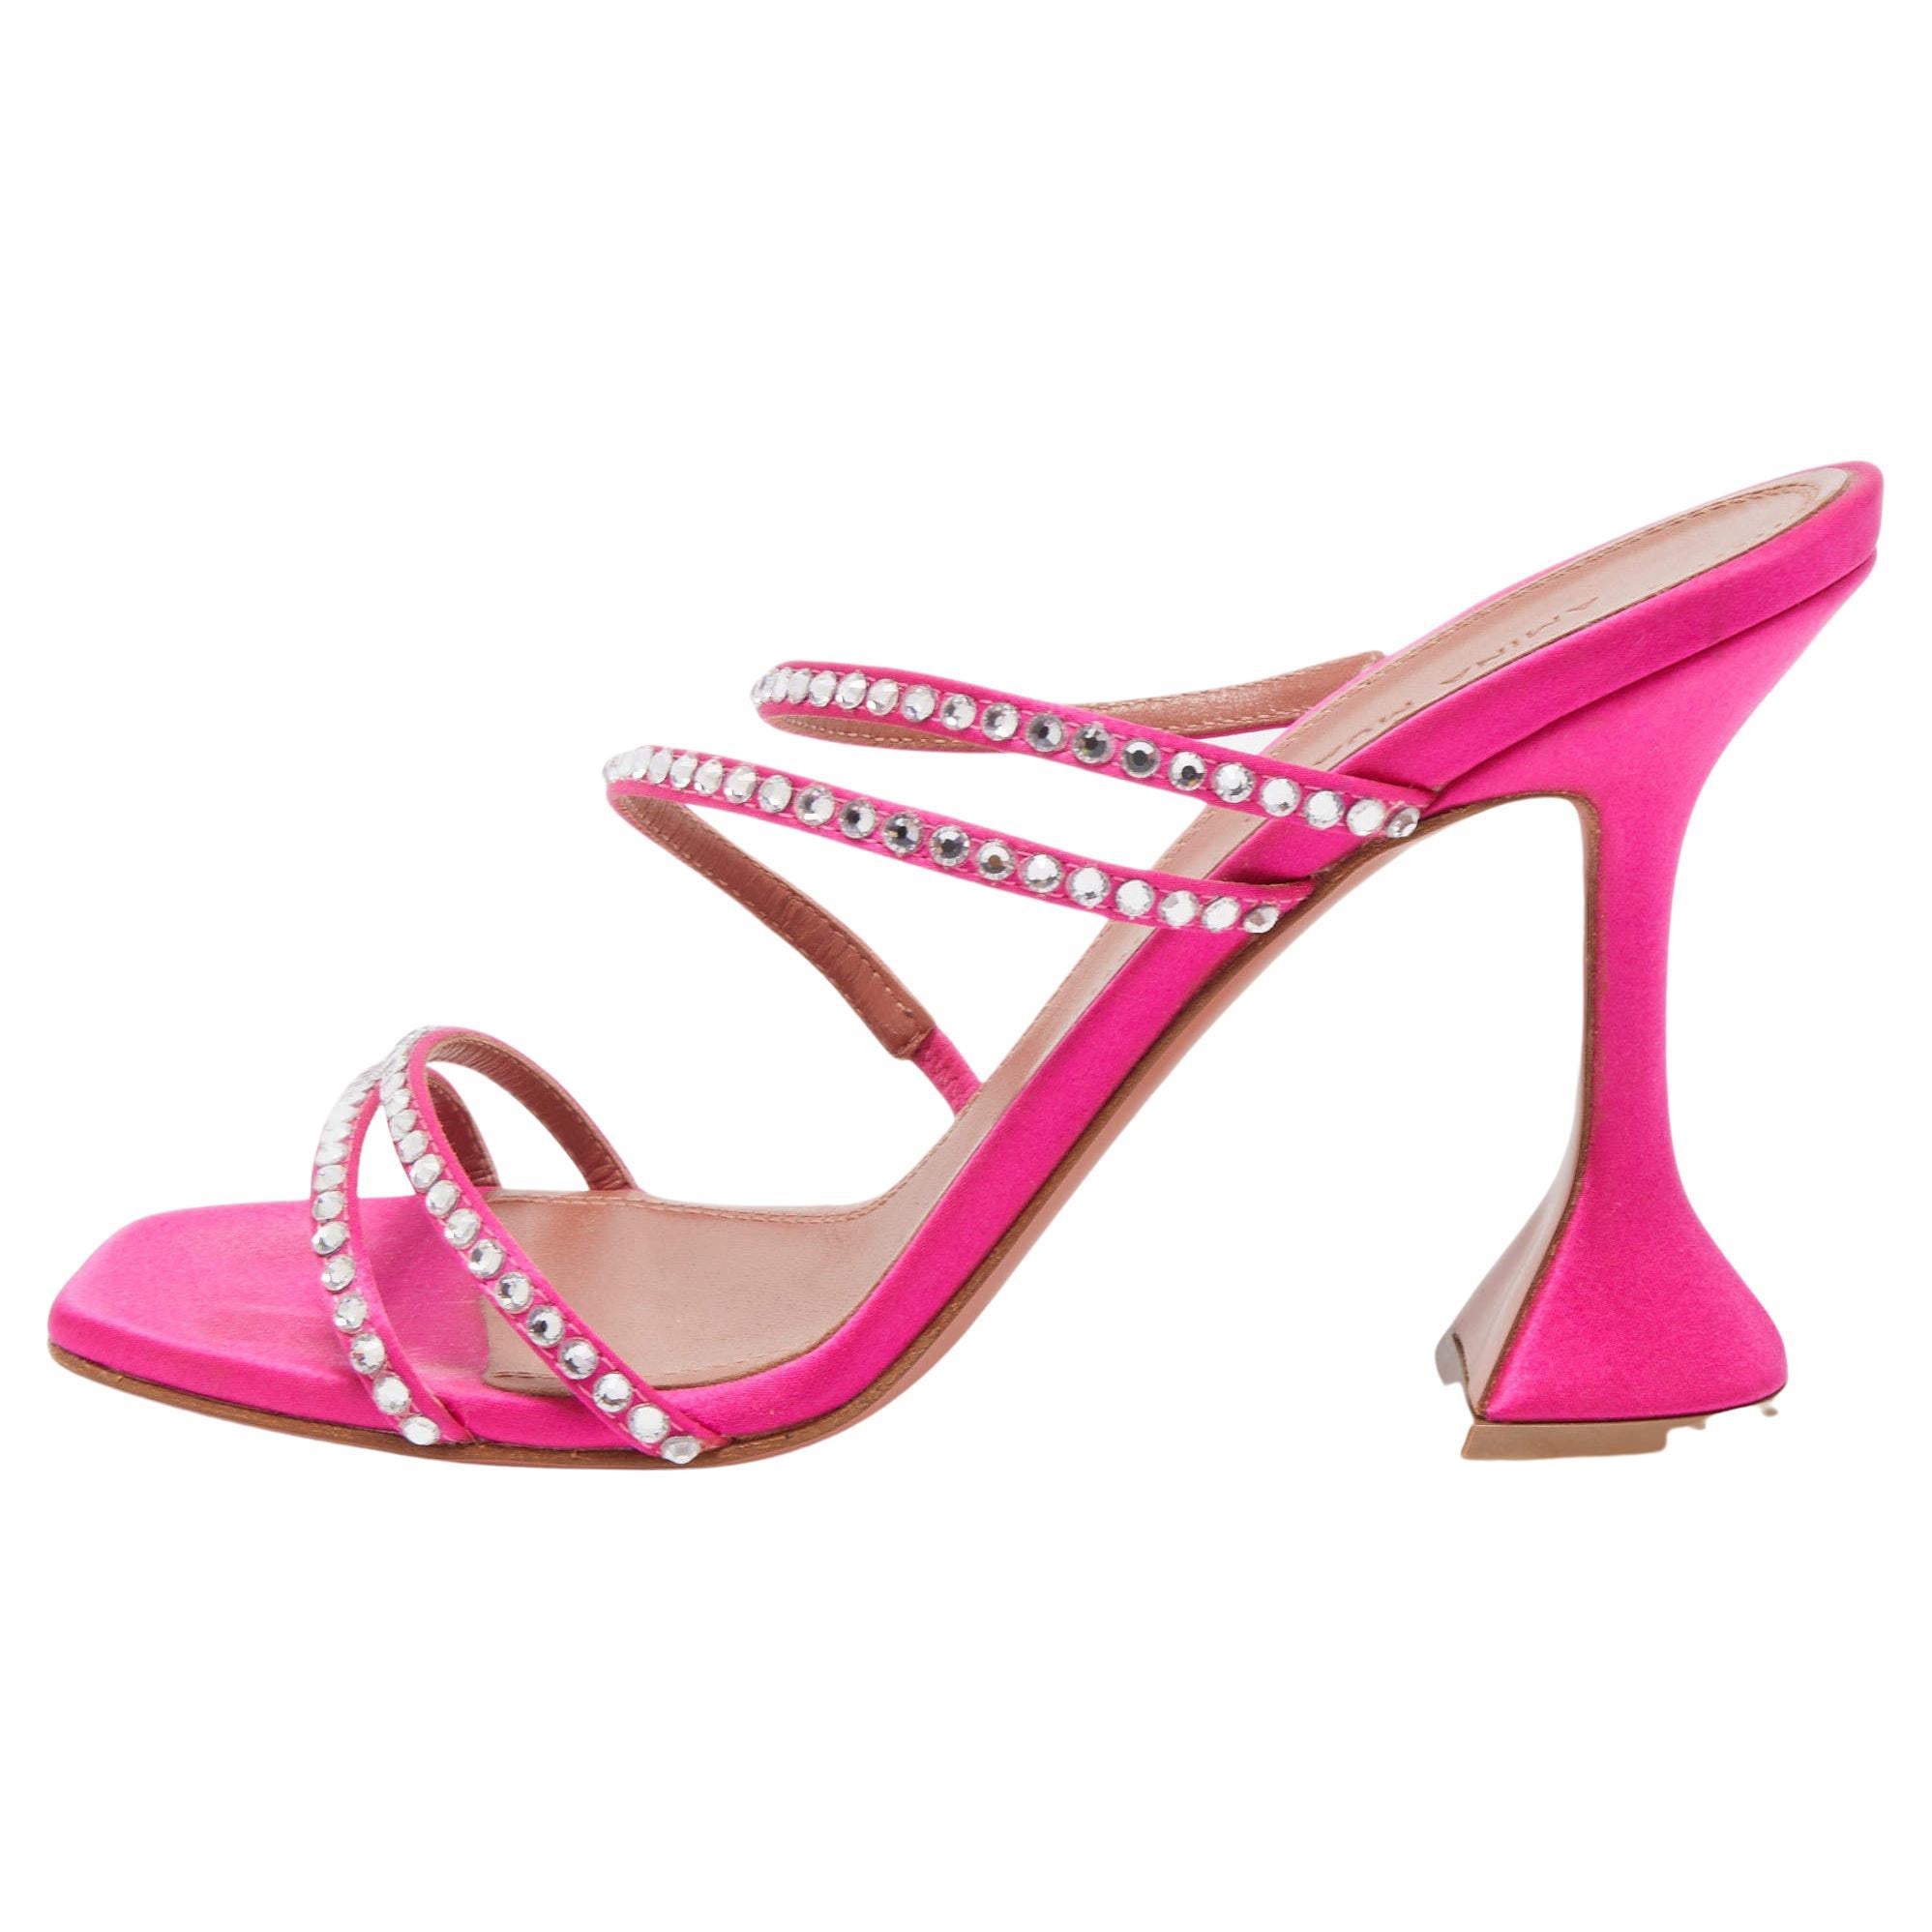 Amina Muaddi Pink Satin Gilda Crystal Embellished Sandals Size 37